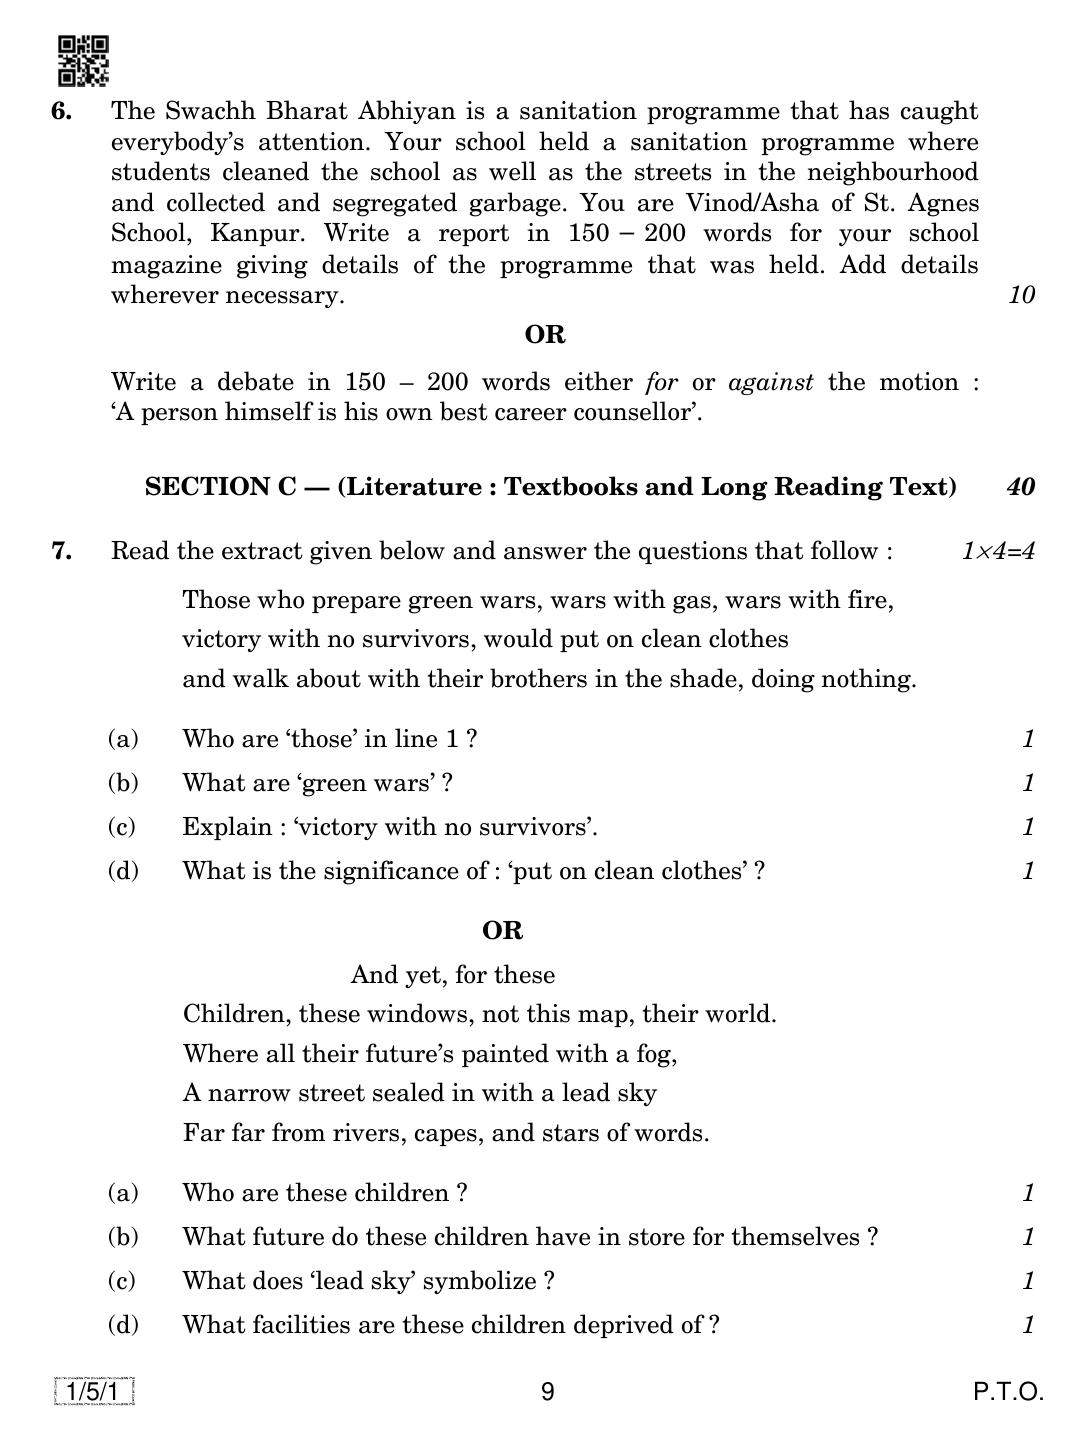 CBSE Class 12 1-5-1 English Core 2019 Question Paper - Page 9